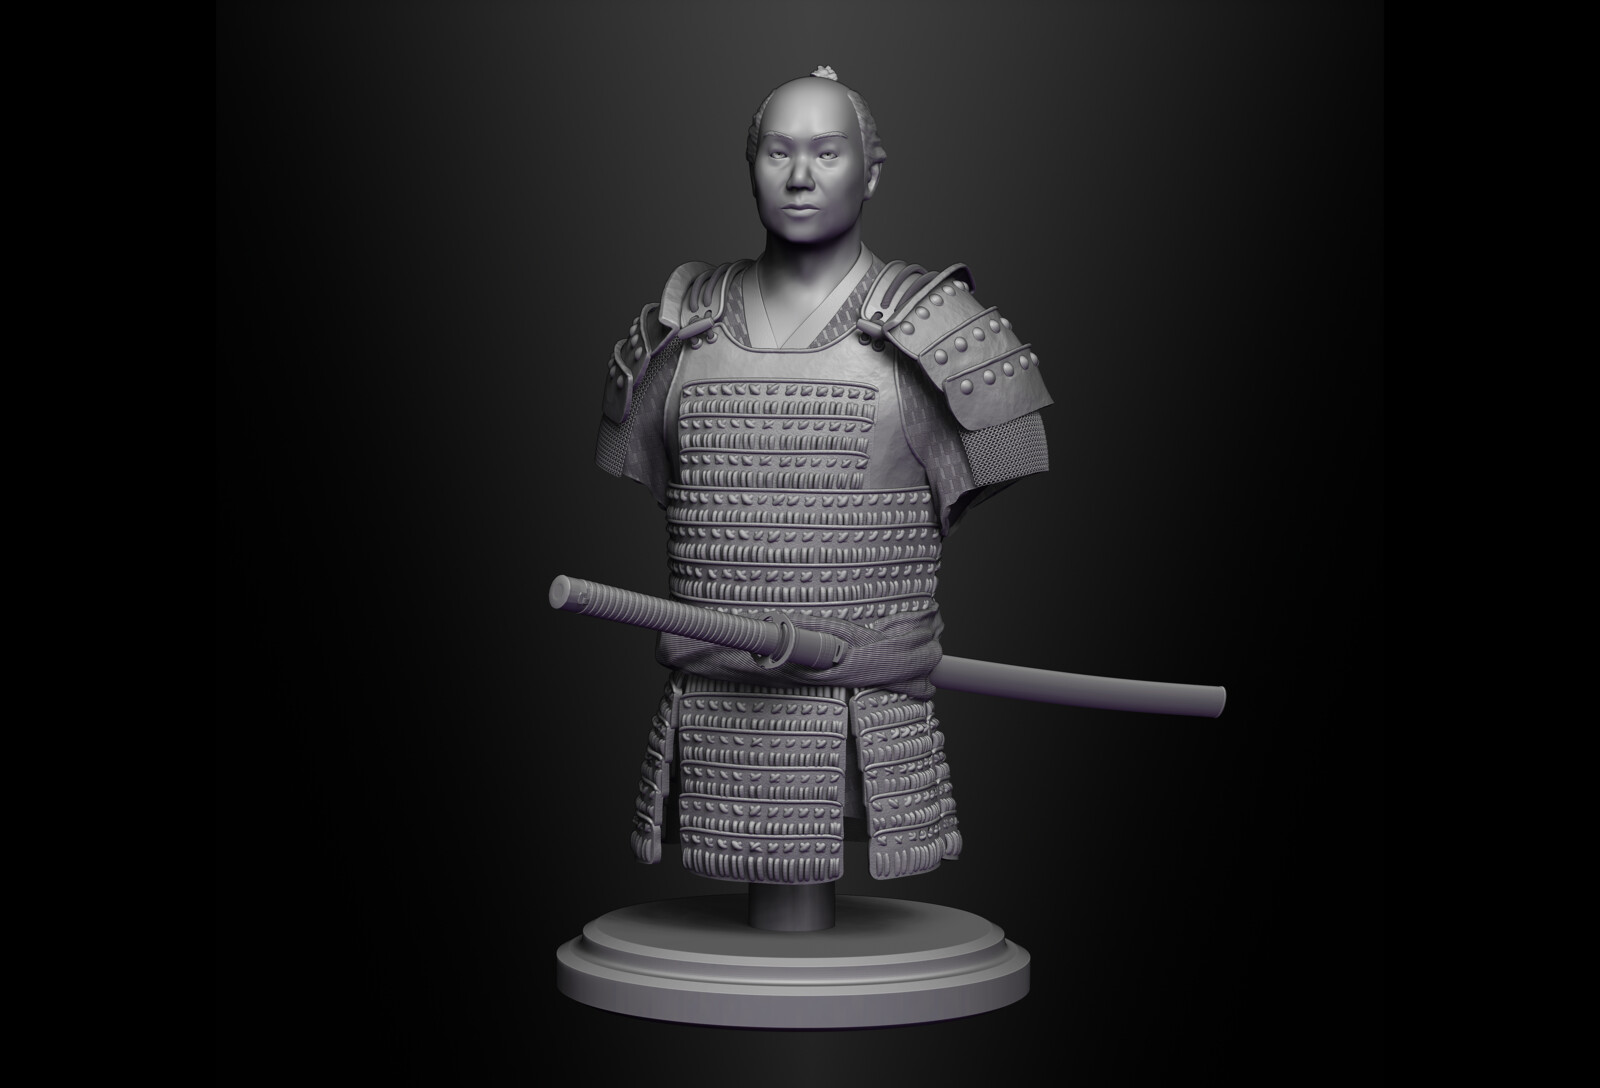 Samurai Bust